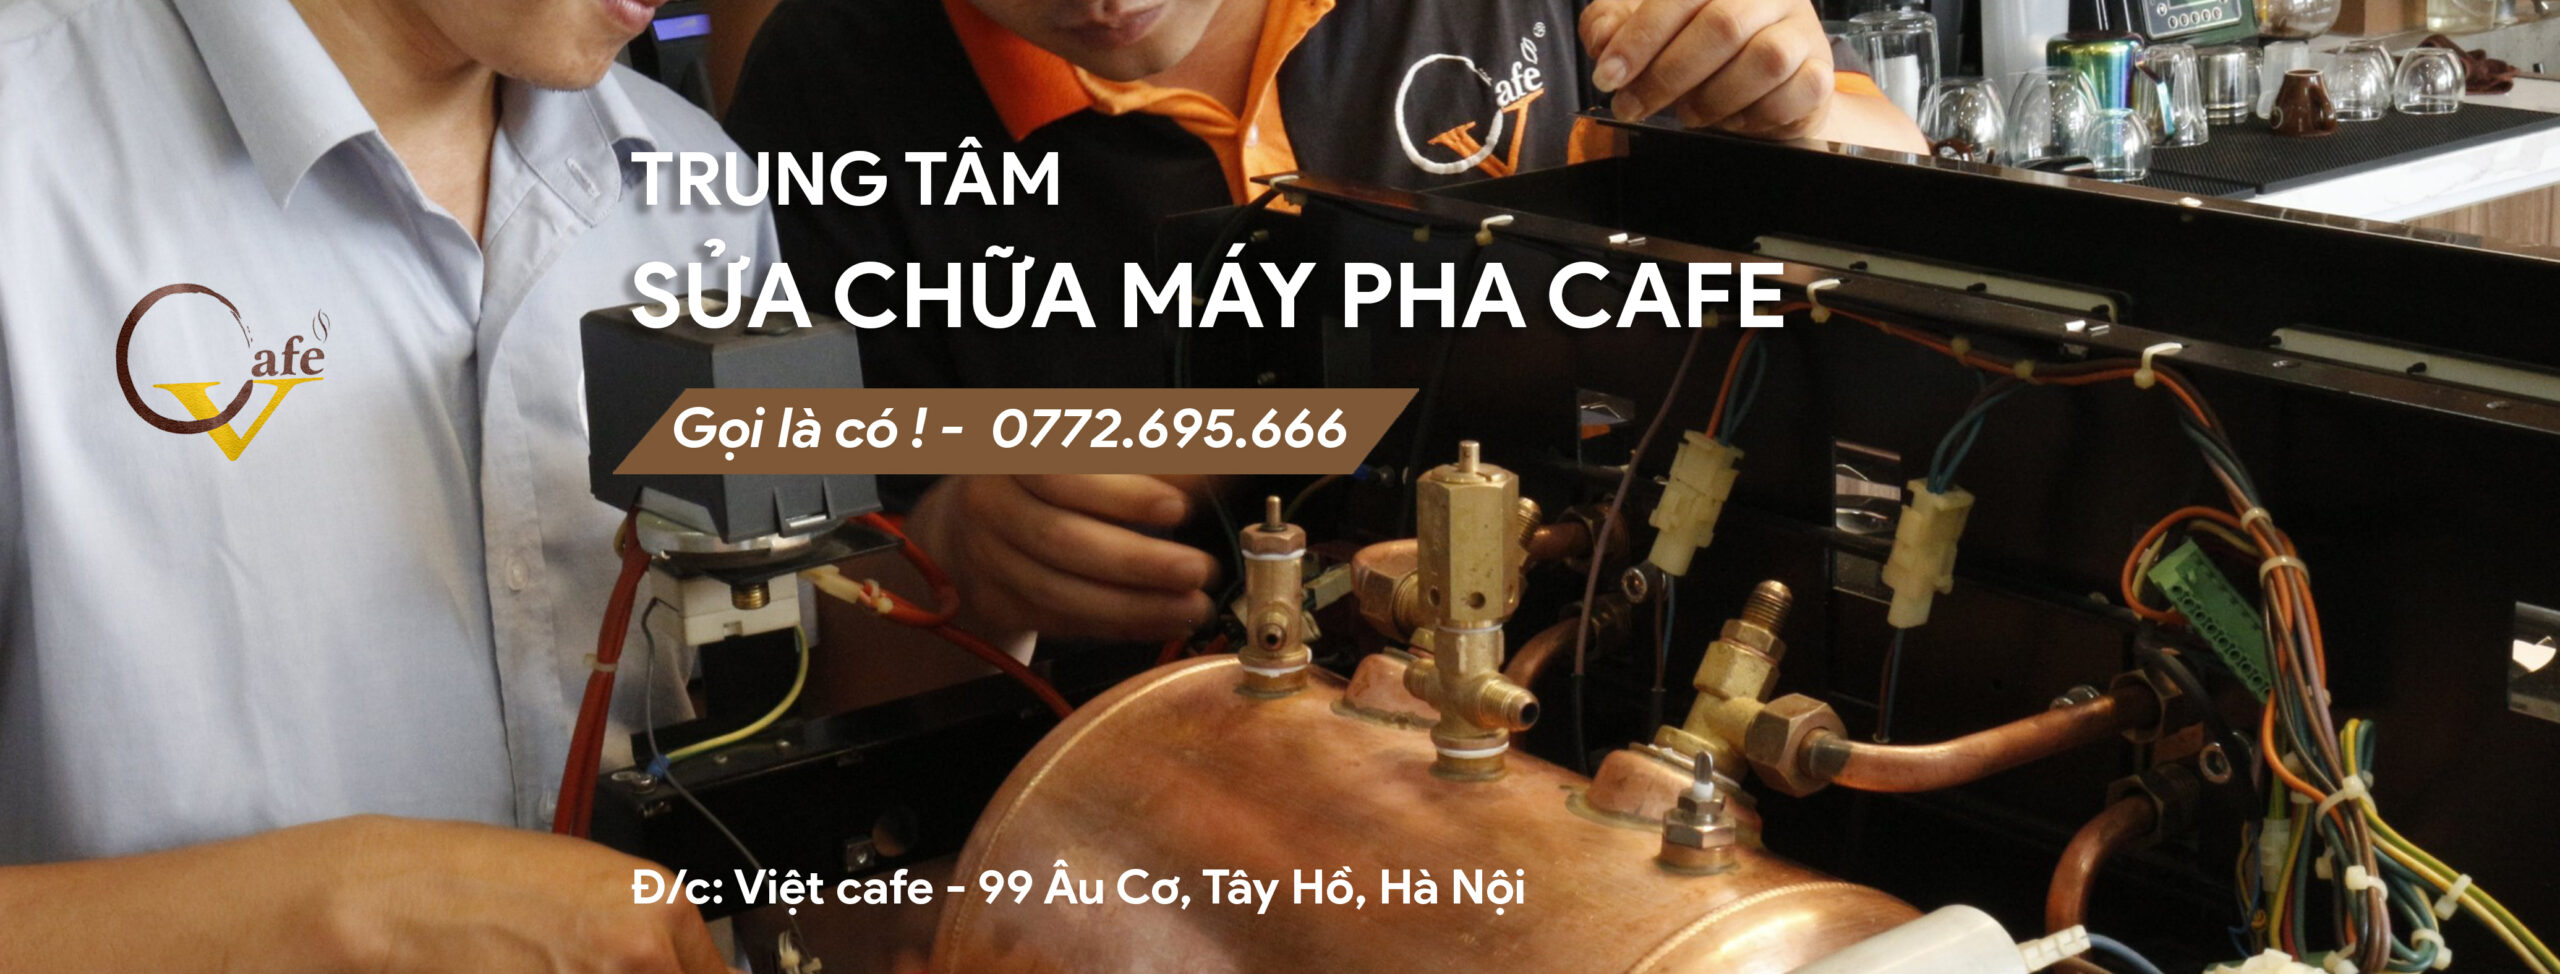 Sua-chua-may-pha-cafe-Vietcafe